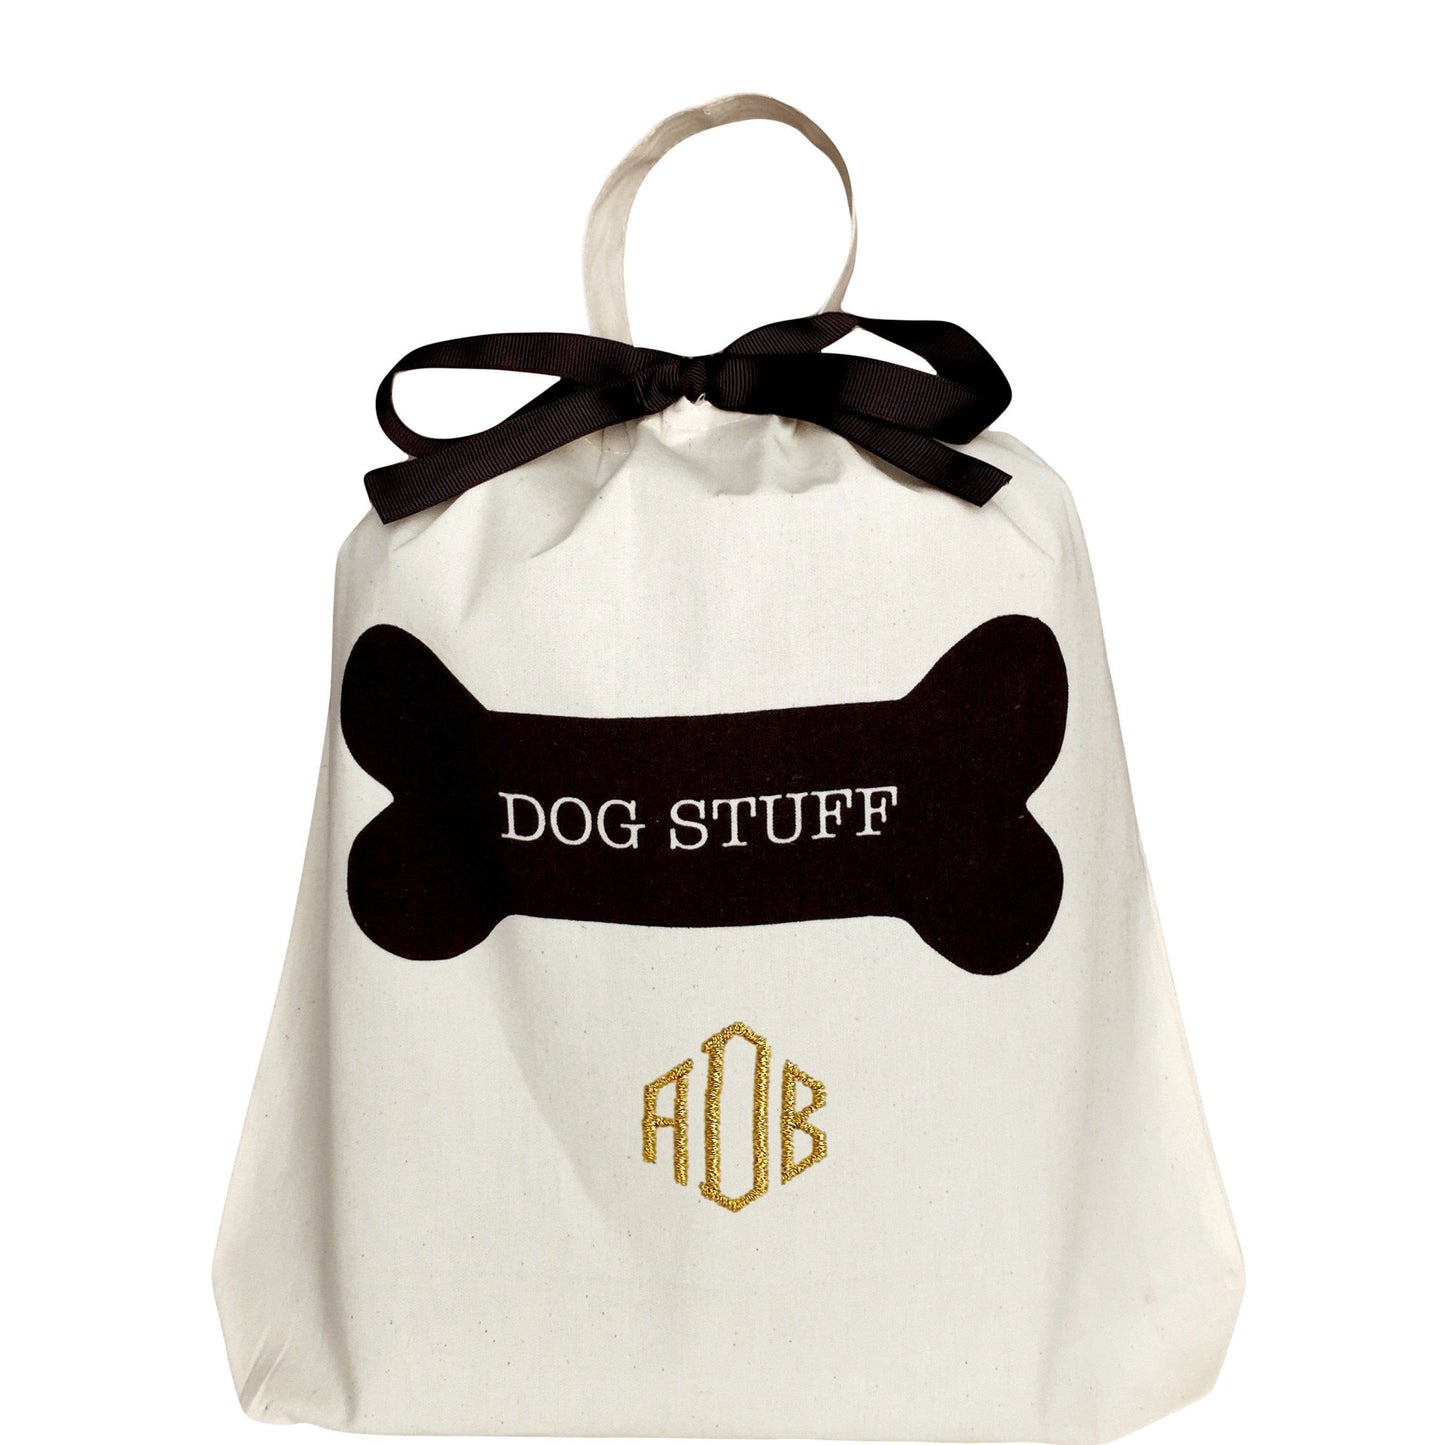 
                                      
                                        Dog stuff organizing bag with "ADB" monogrammed on the bottom. 
                                      
                                    